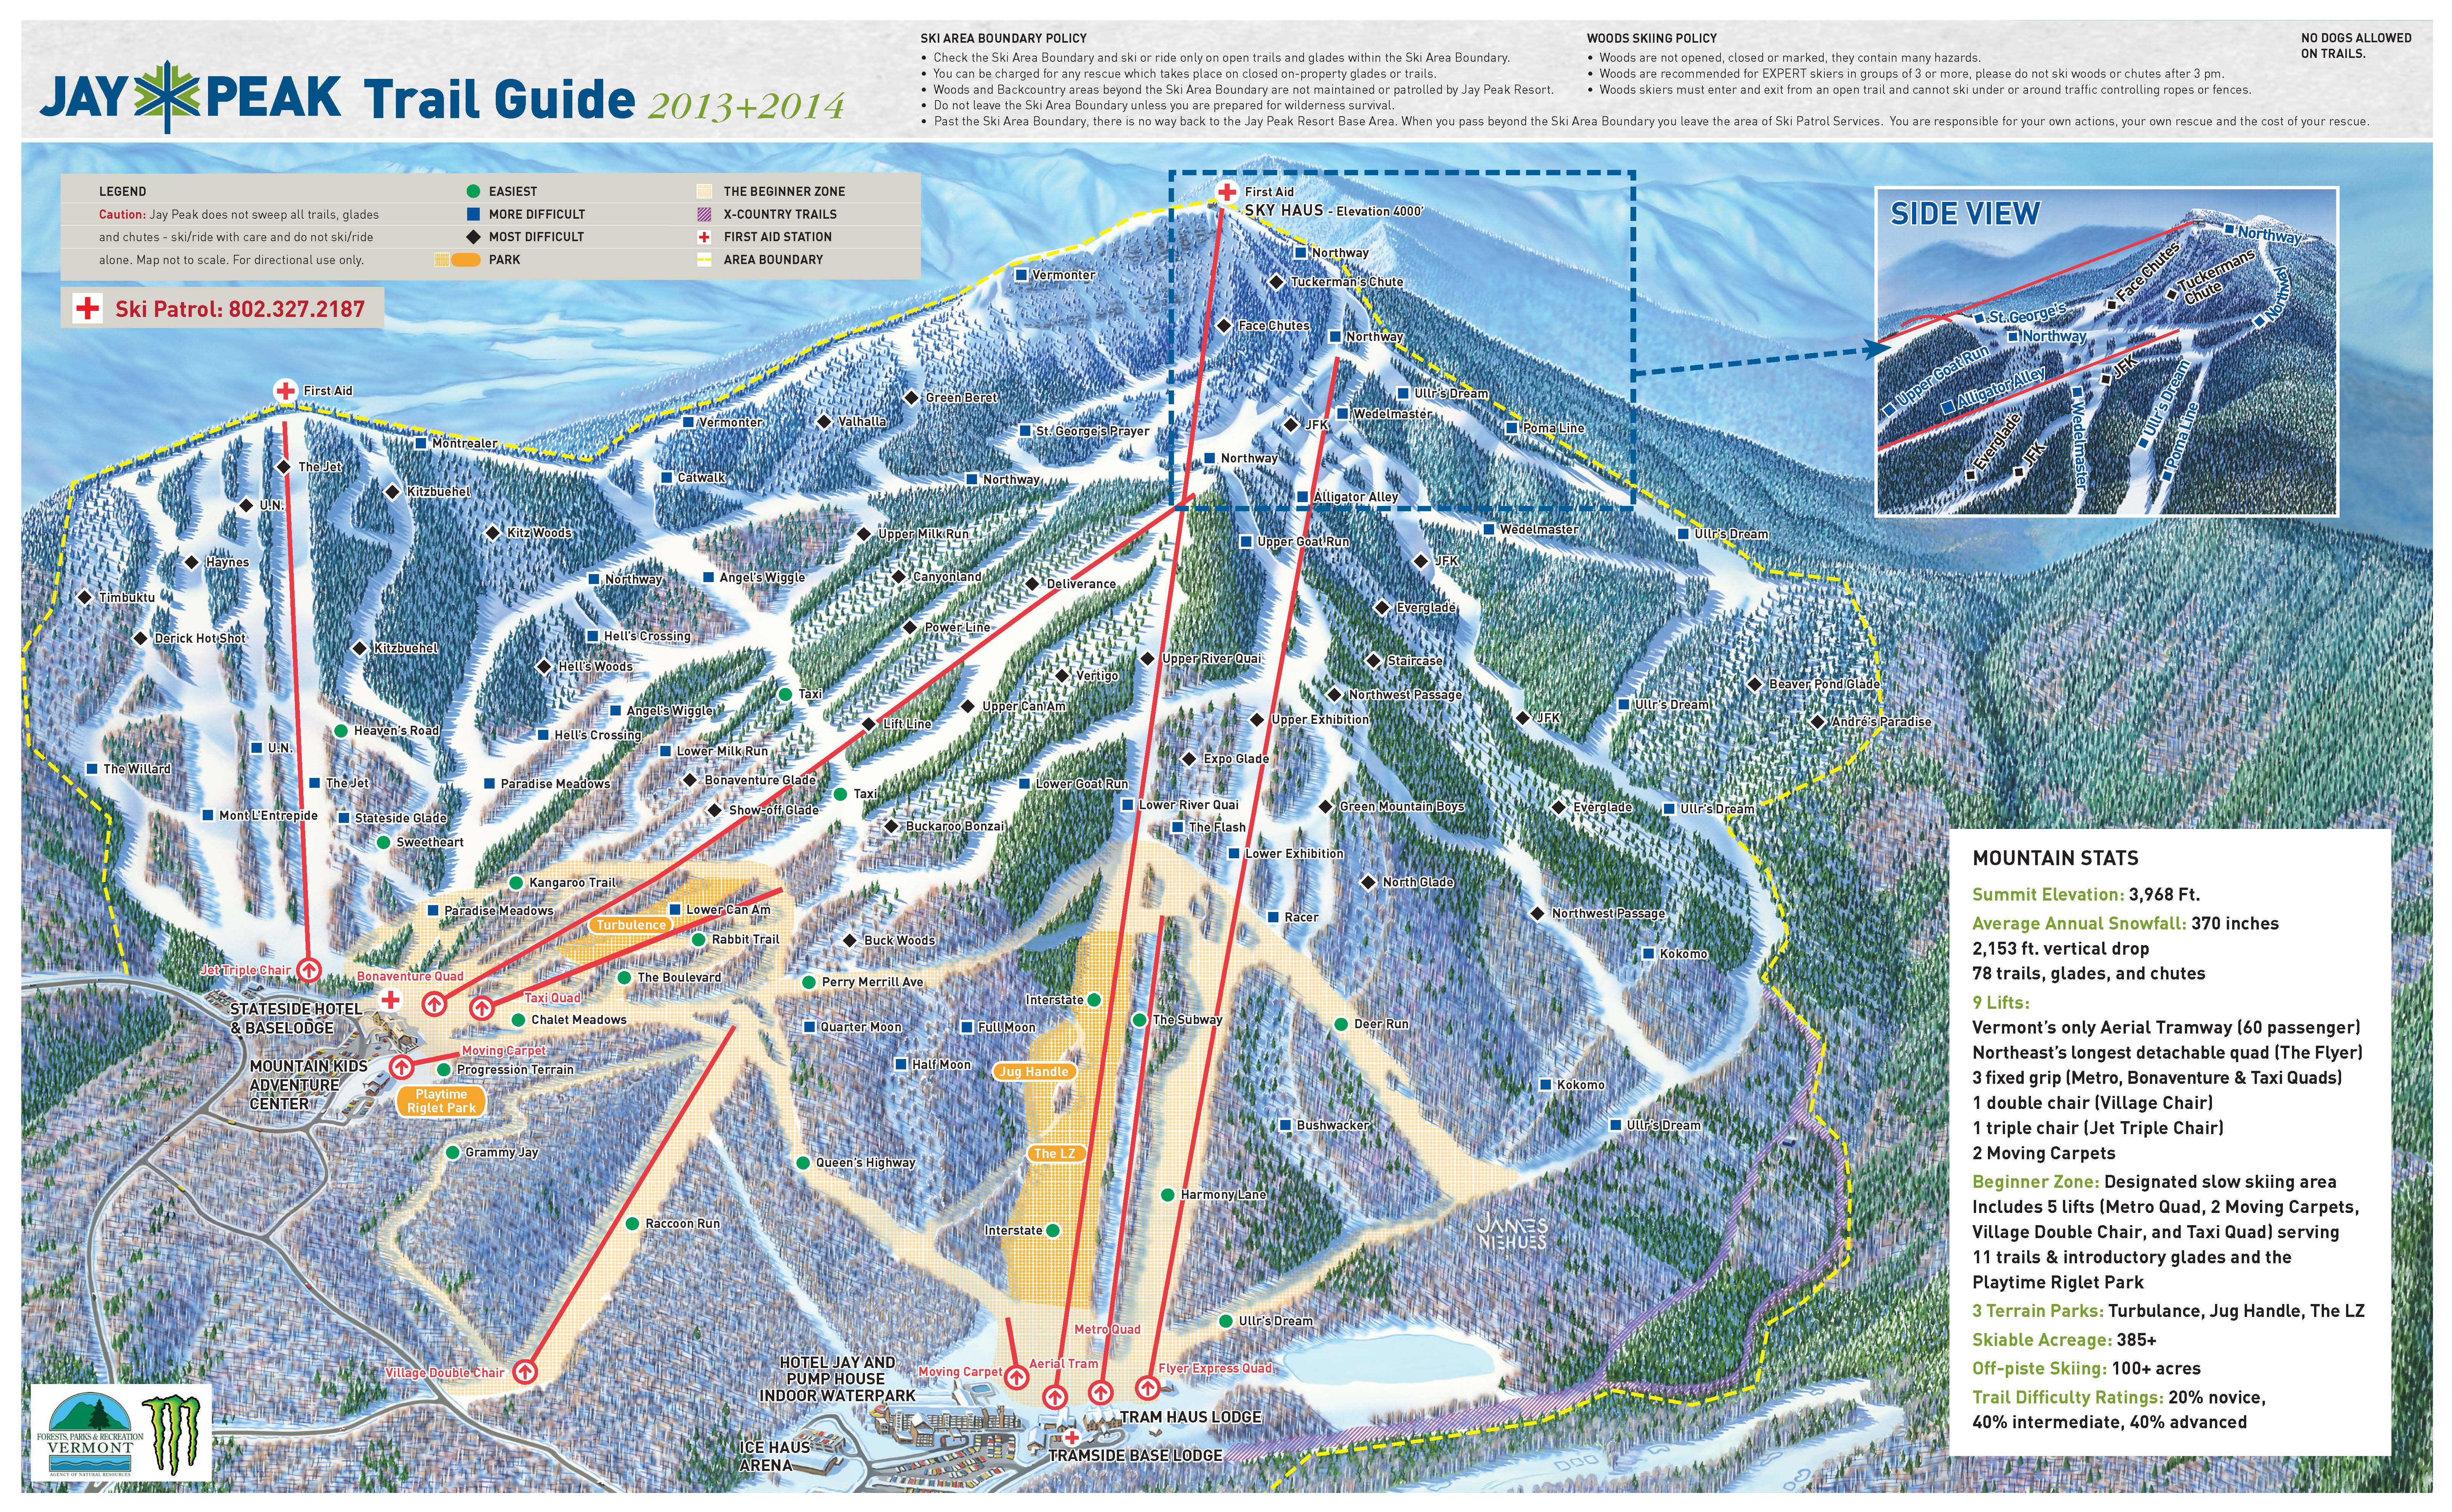 Jay Peak, VT trail map.